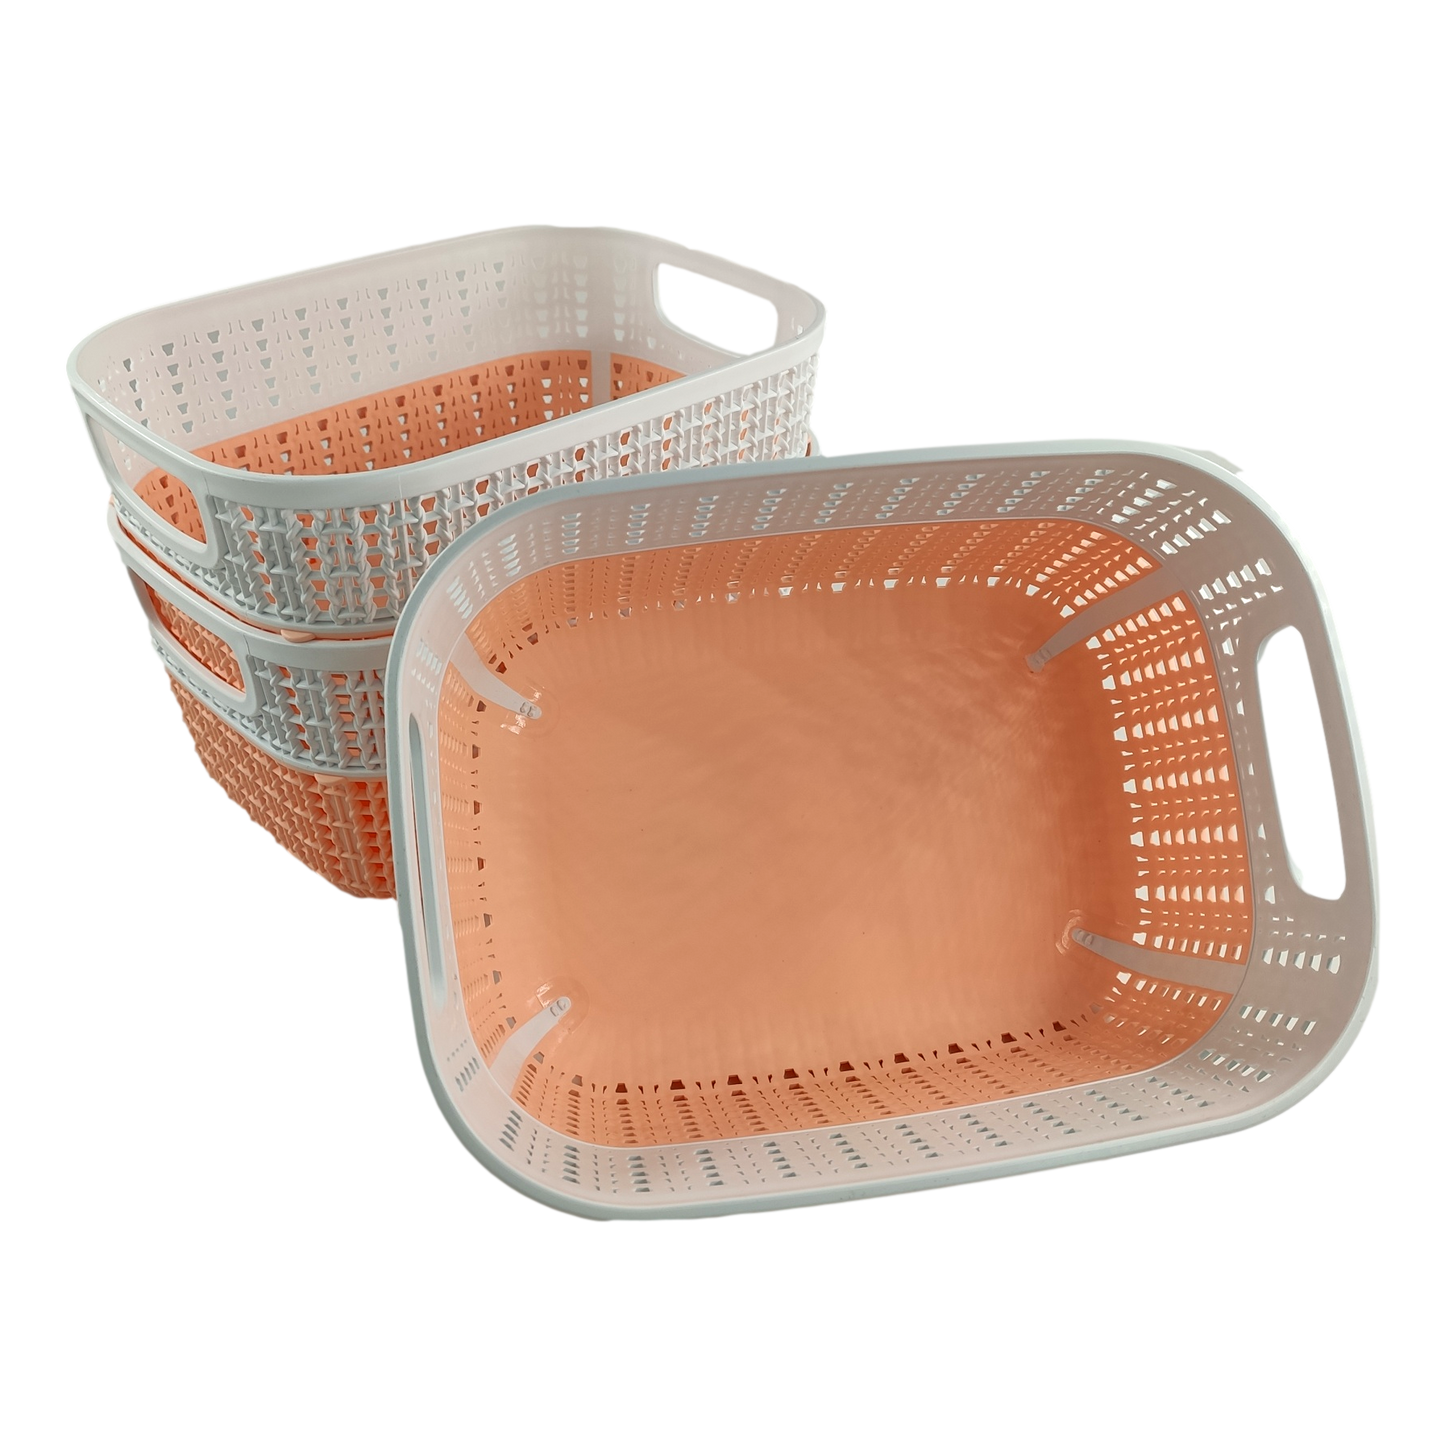 Set of 3 x (3.5LT) Small Plastic Storage Baskets, Ghiordes Knit Basket Shelf Storage